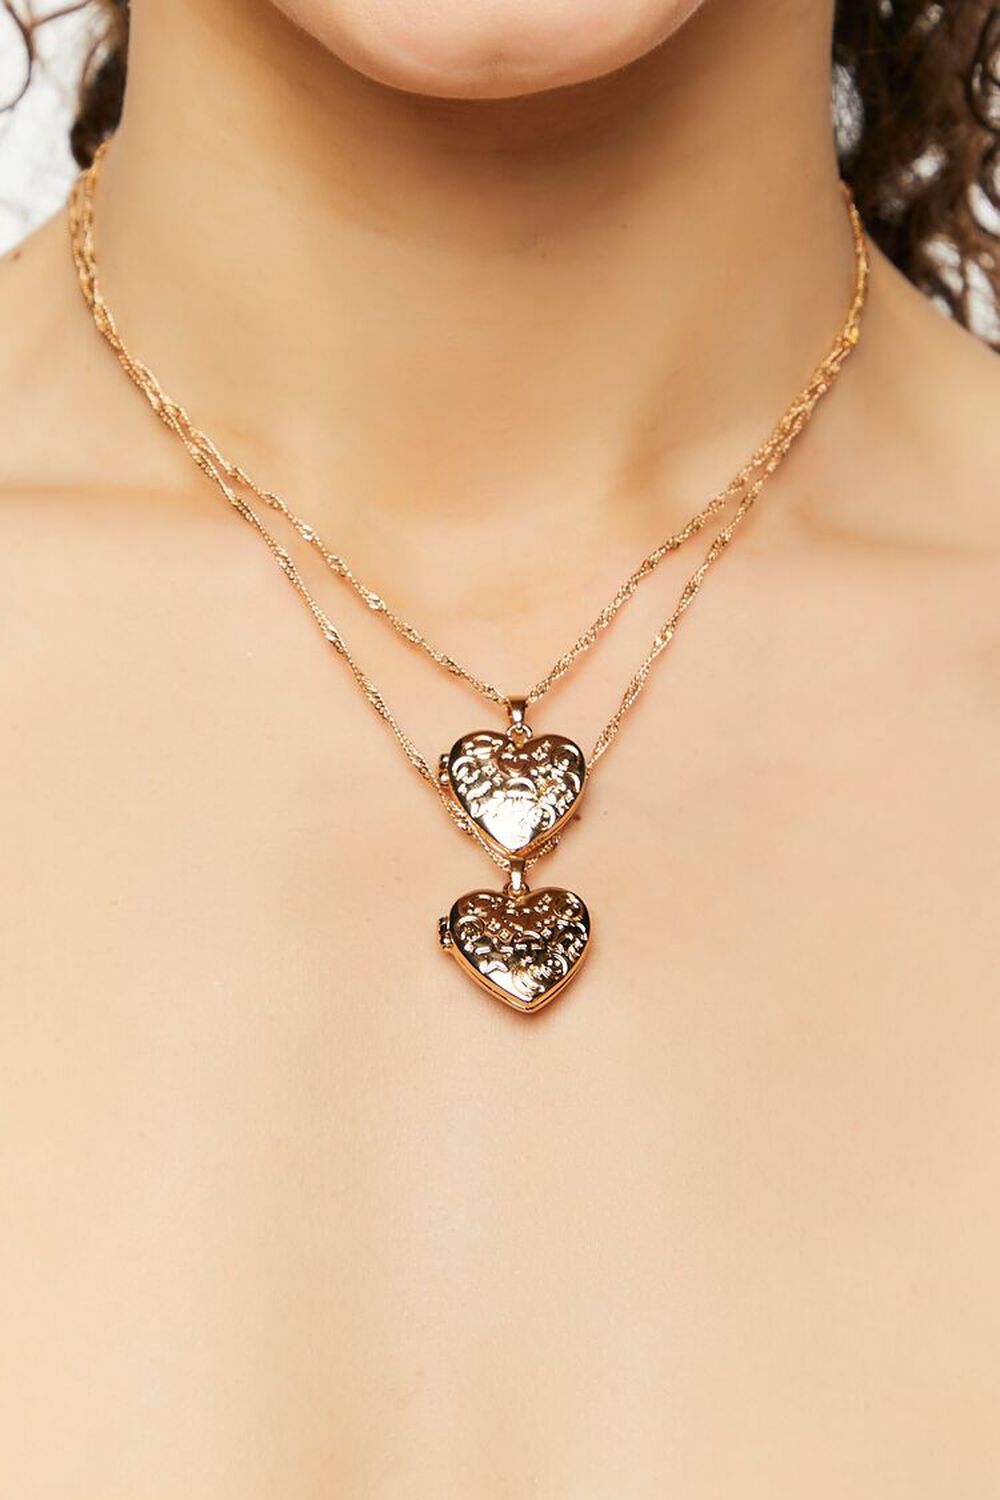 GOLD Heart Locket Necklace Set, image 1